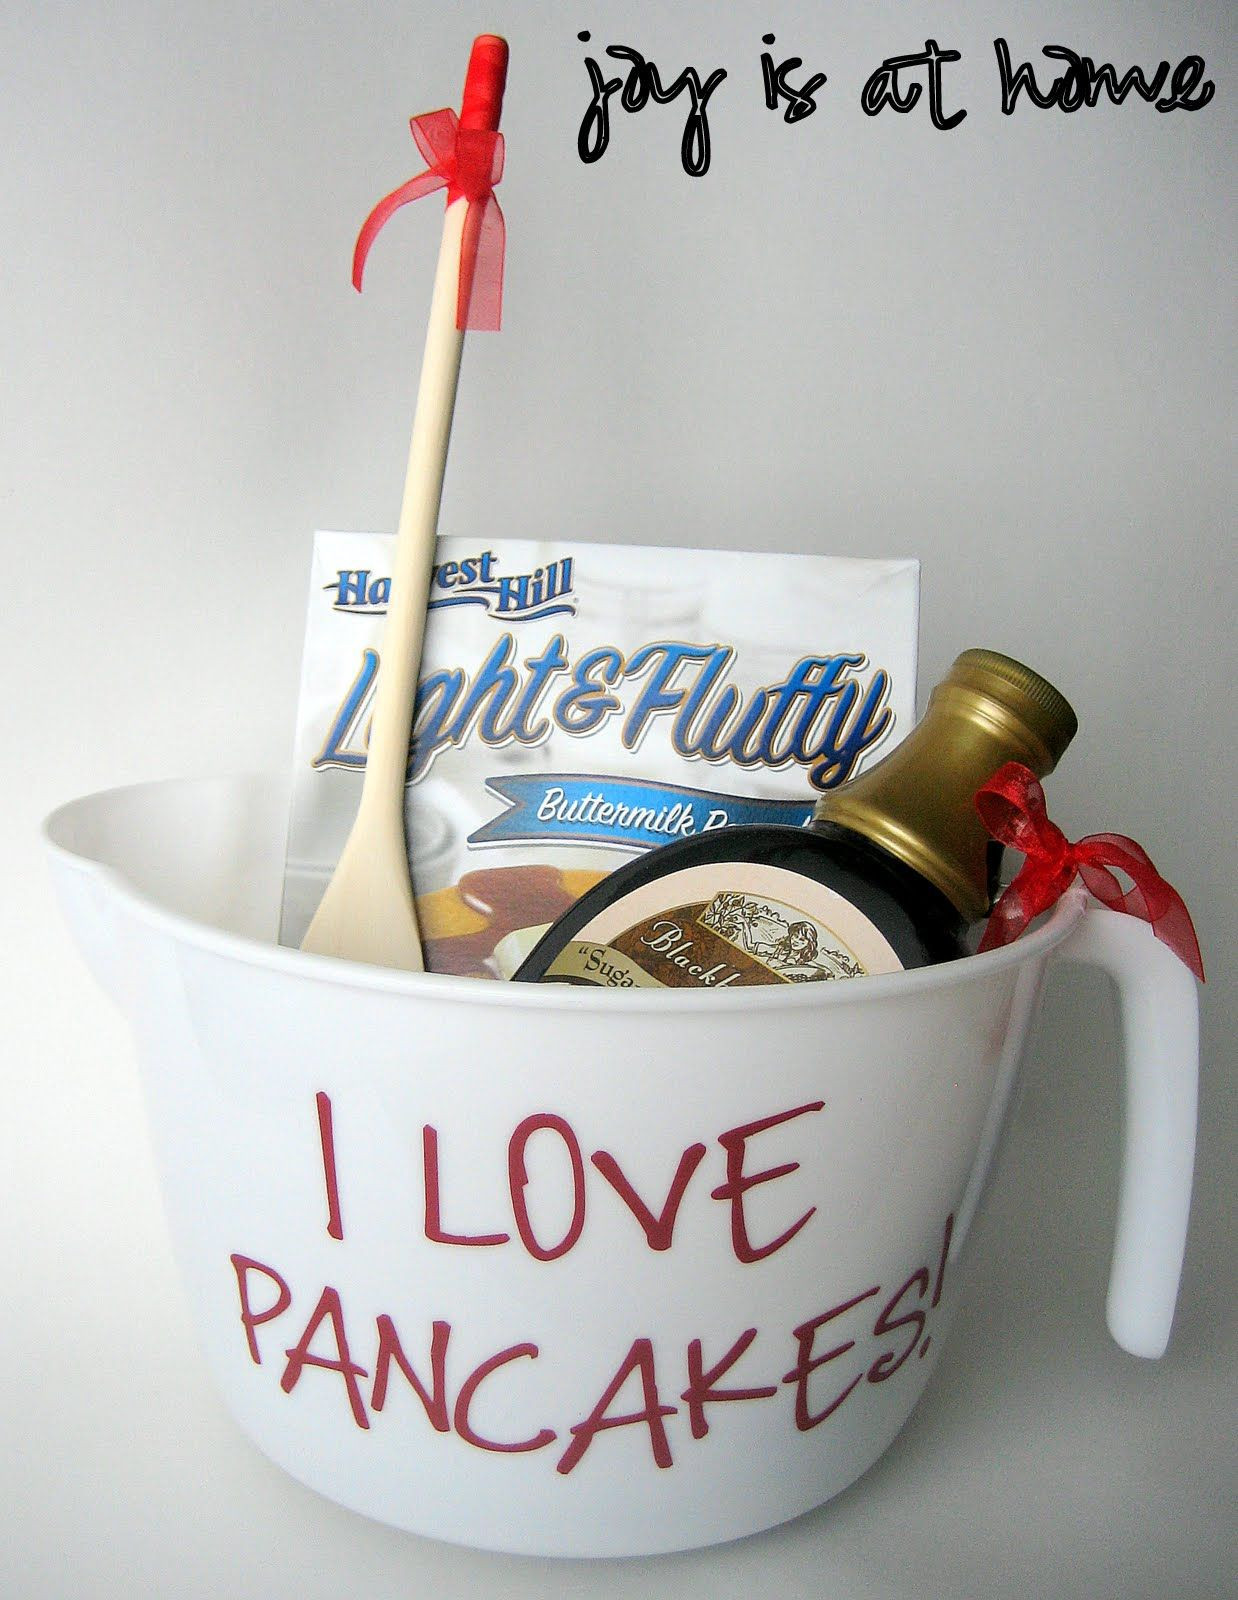 Holiday Party Door Prize Ideas
 Bridal Shower Door Prize idea Pancake lover basket